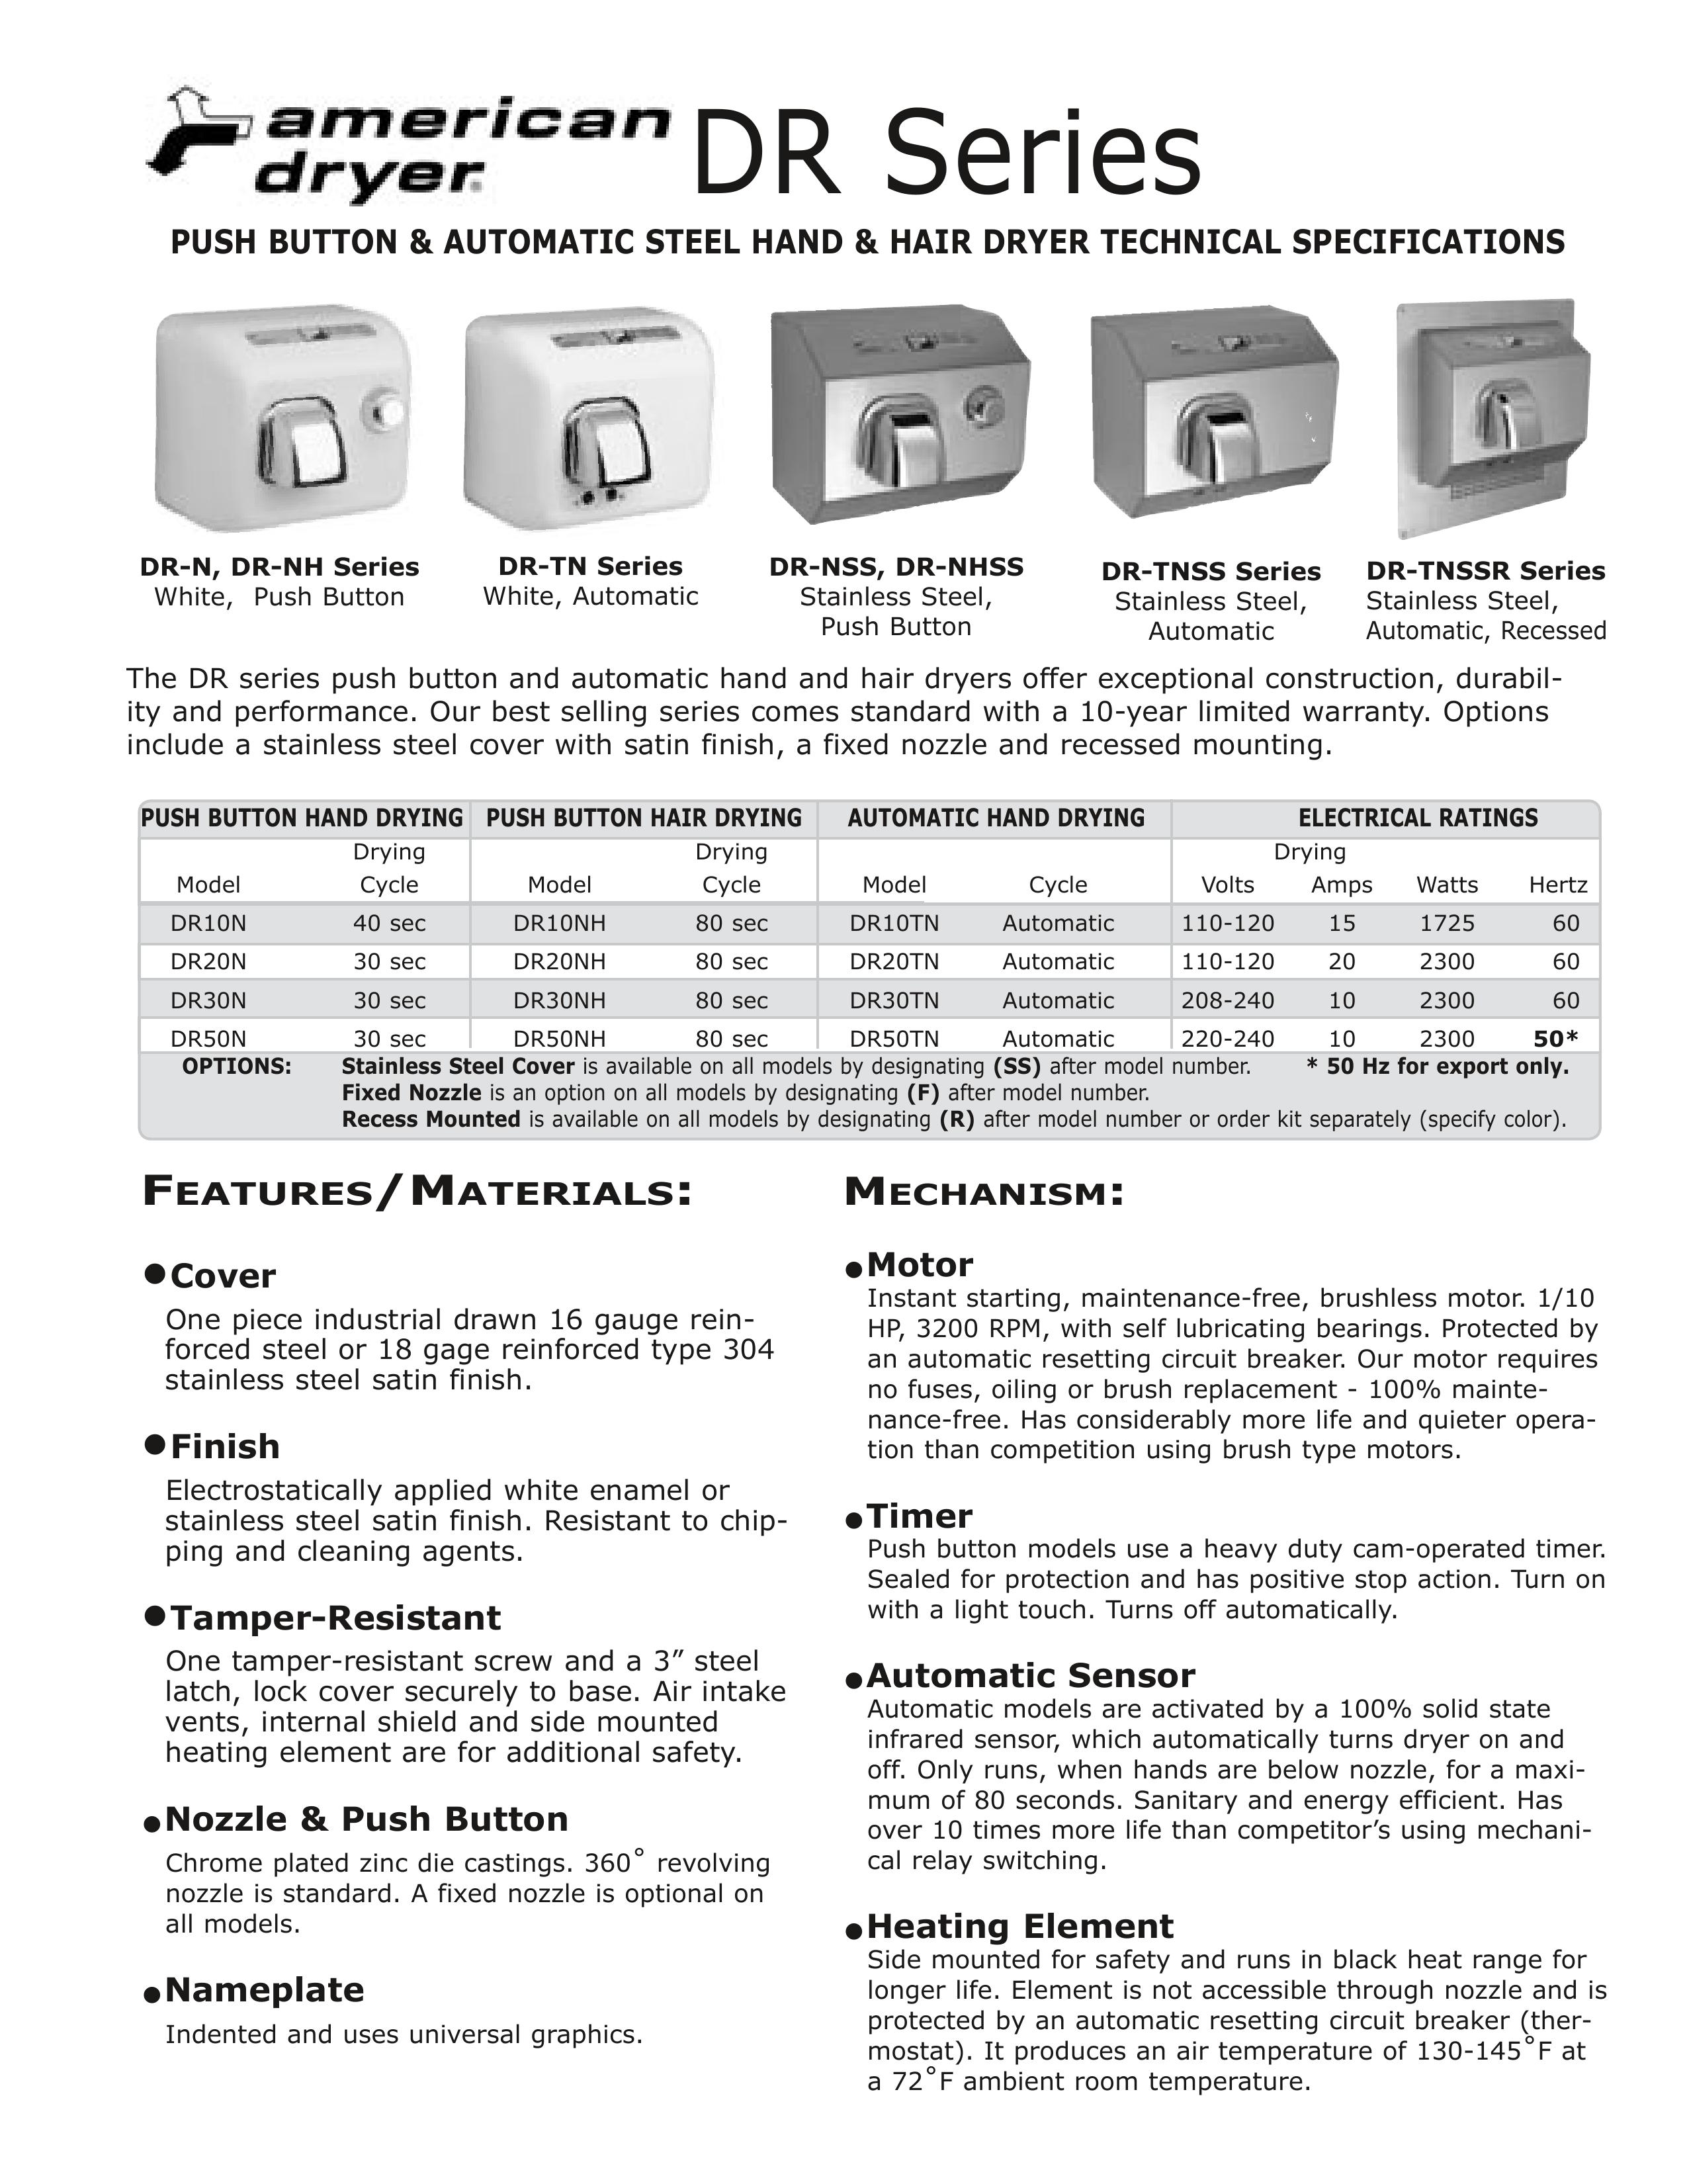 American Dryer DR-TN Hair Dryer User Manual